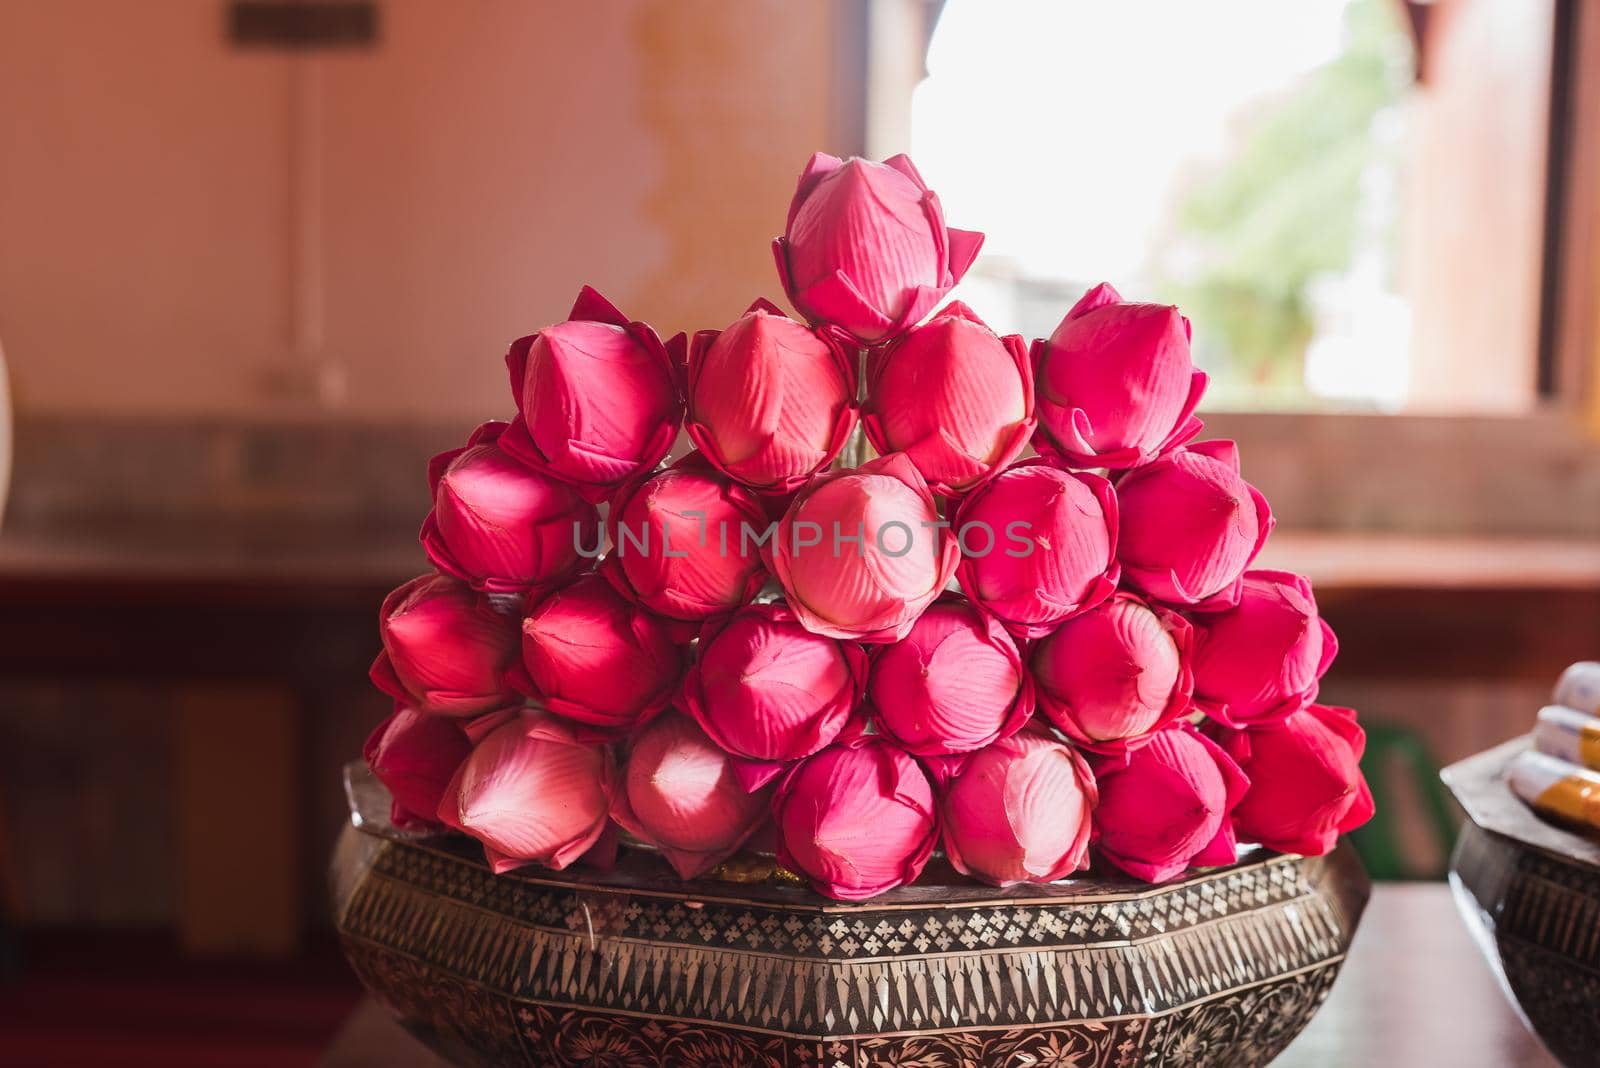 lotus for Buddhist religious ceremony

 by Wmpix